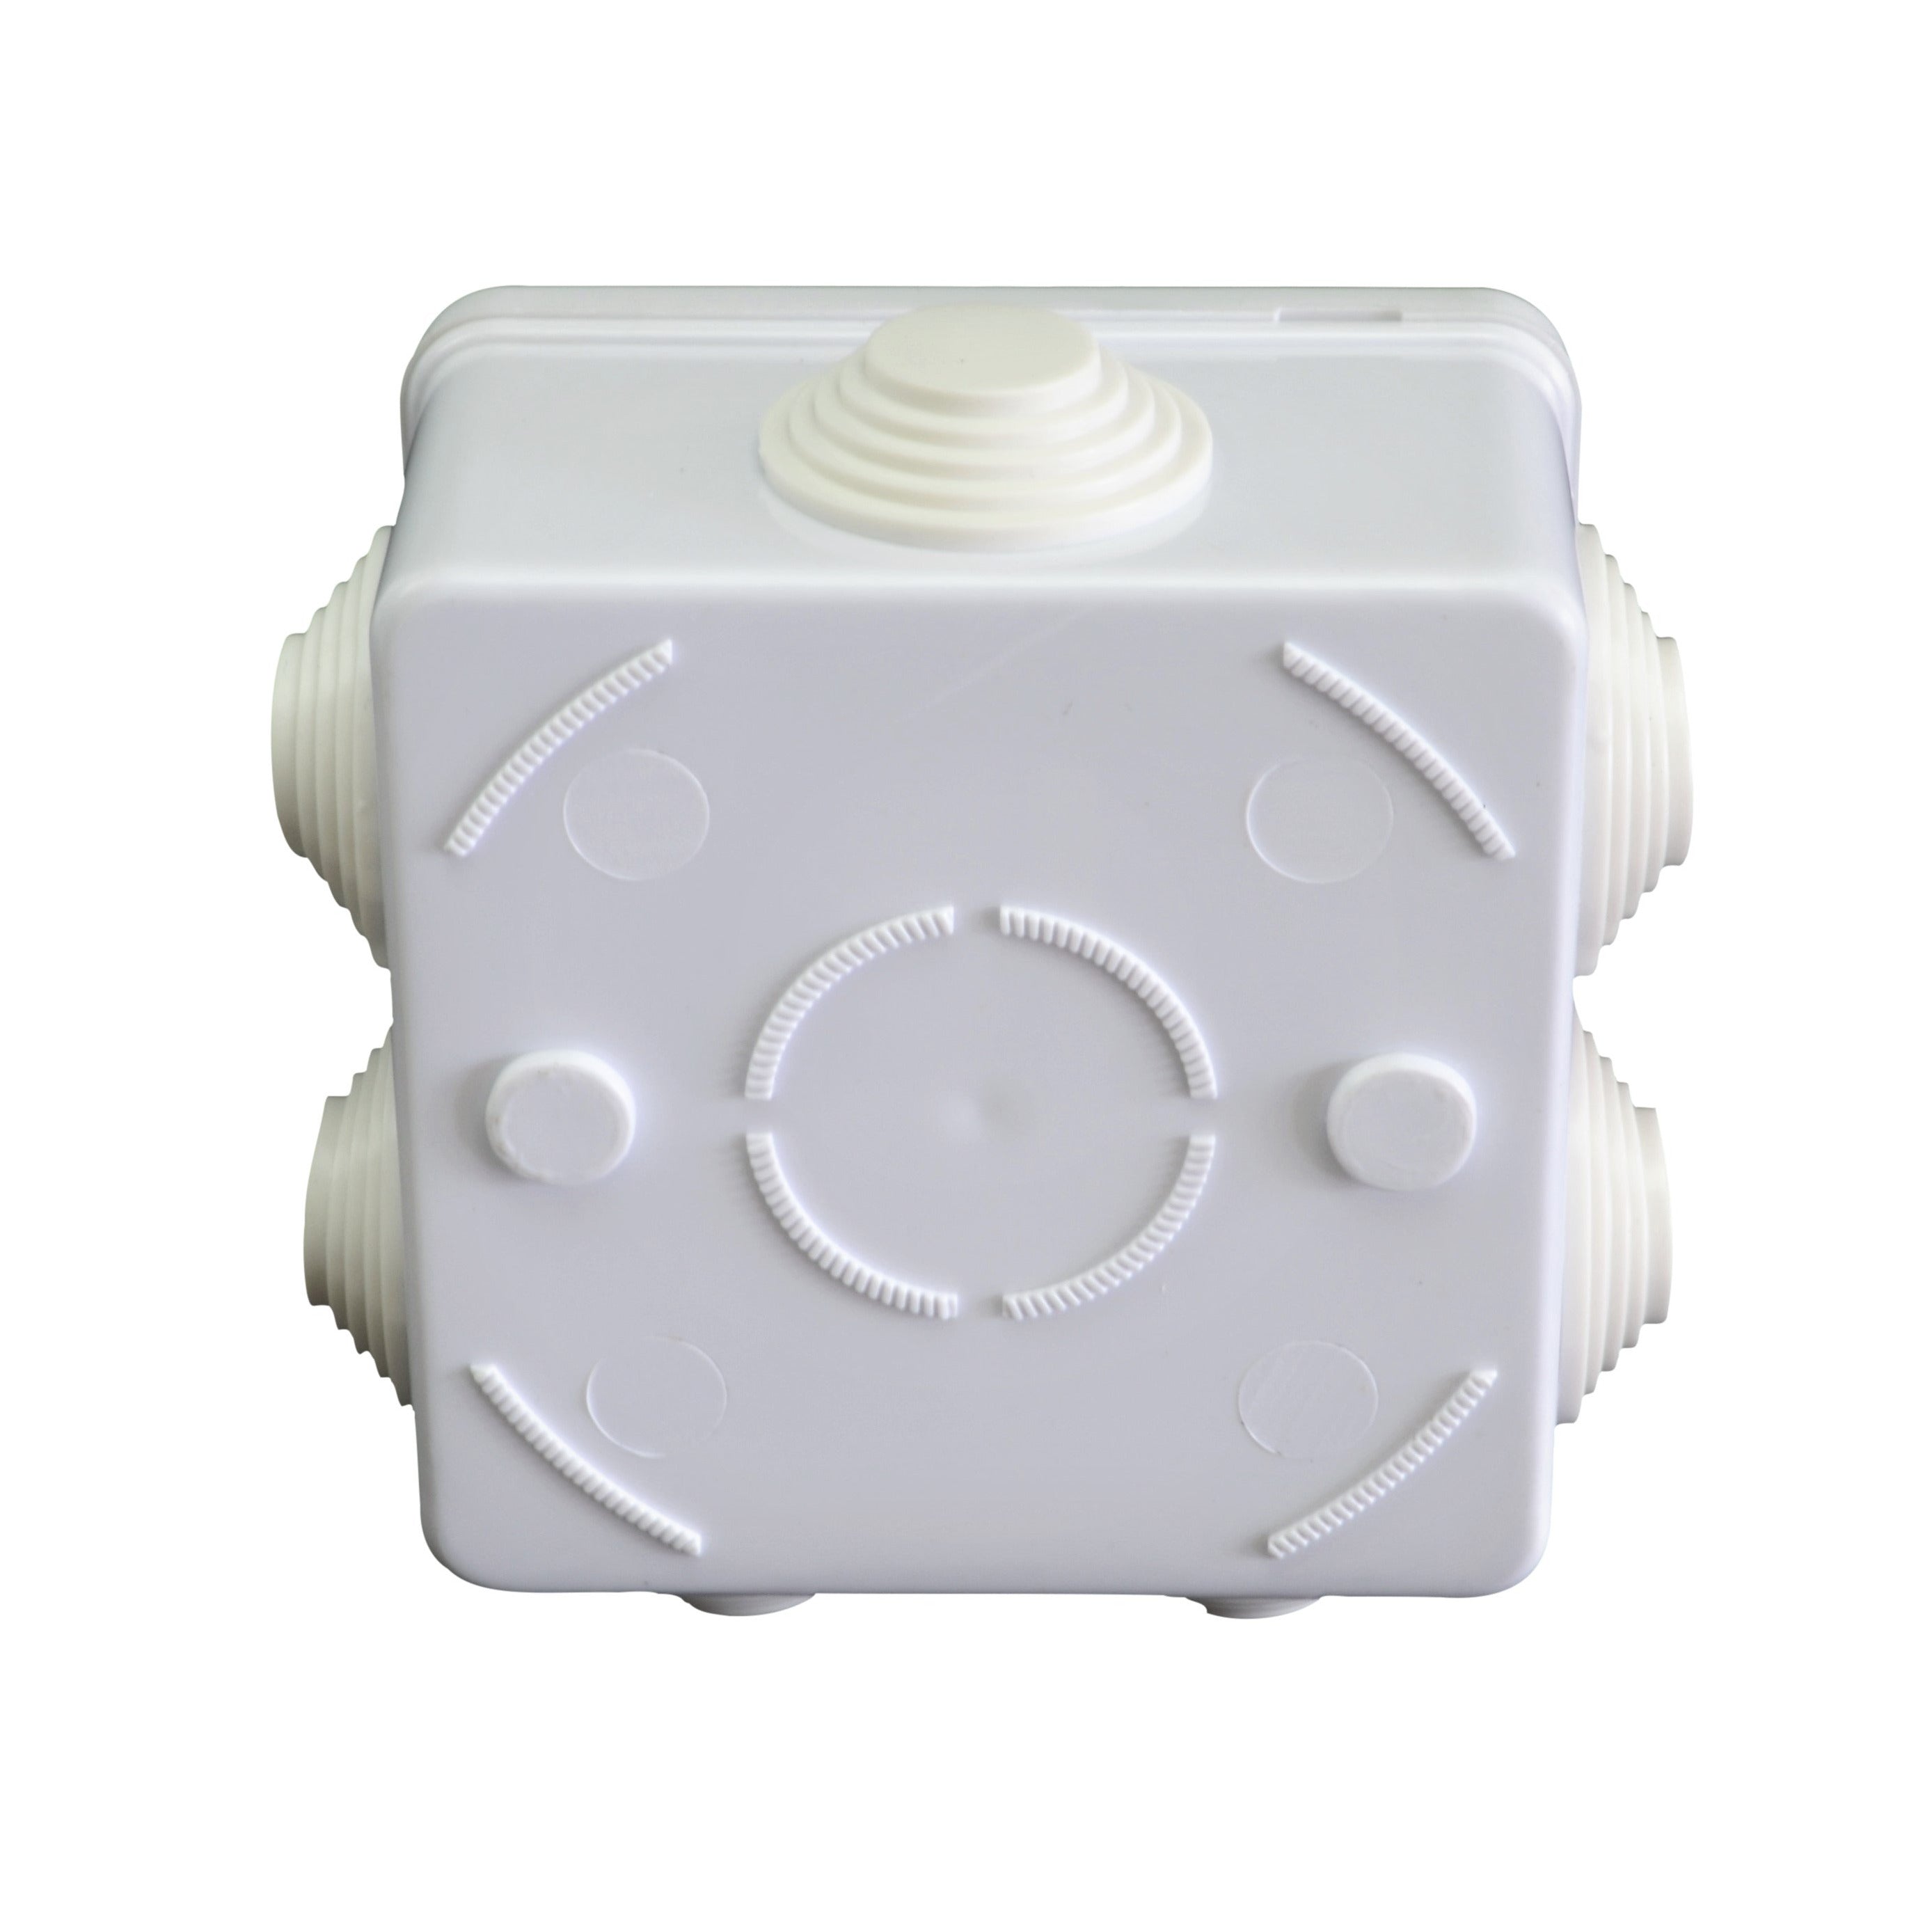 85x85x50 mm ABS Plastic IP55 Waterproof Junction Box